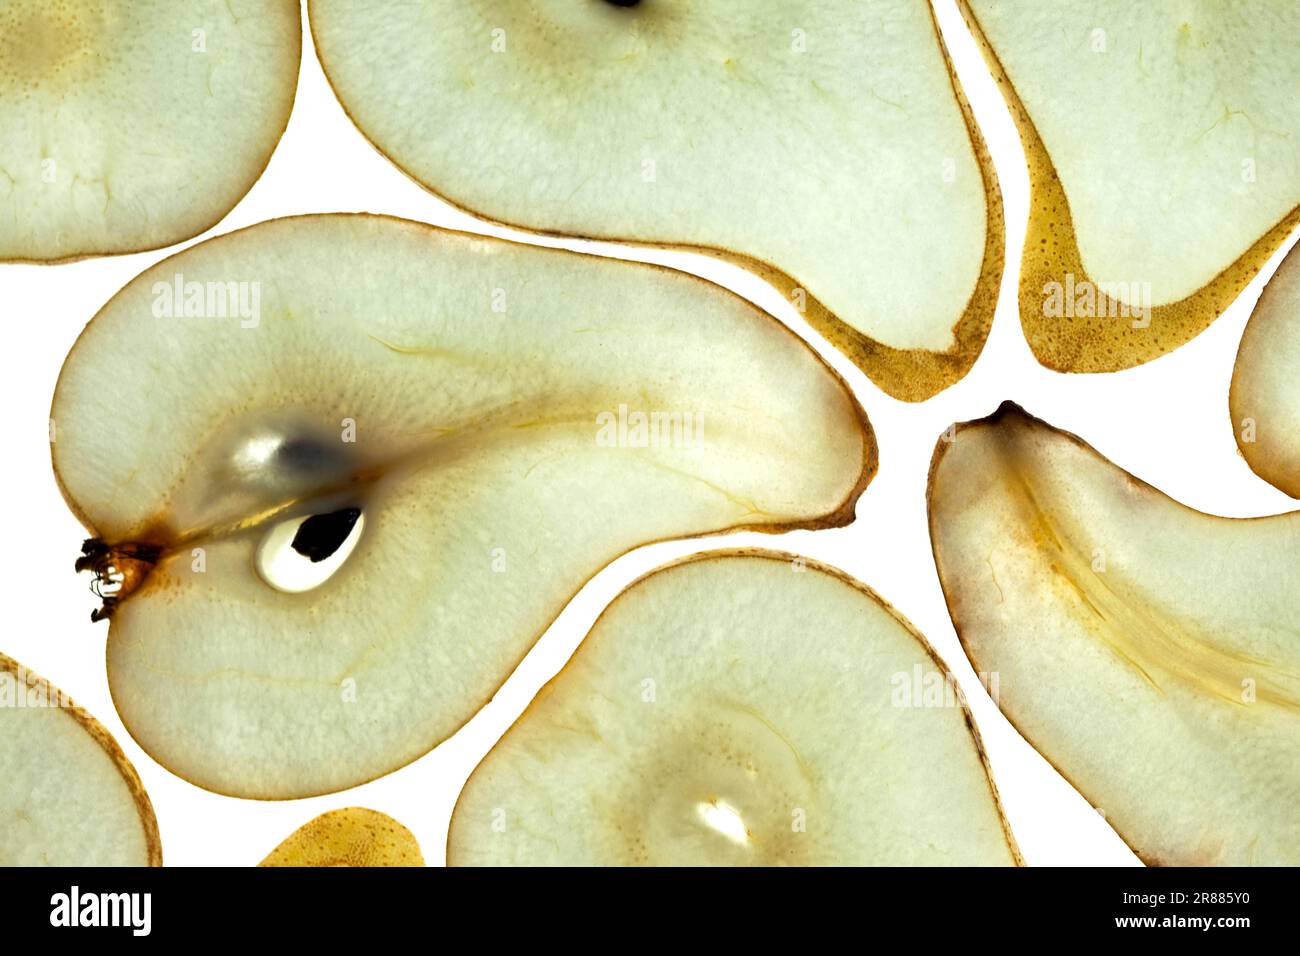 Sliced pear against white background Studio shot Stock Photo